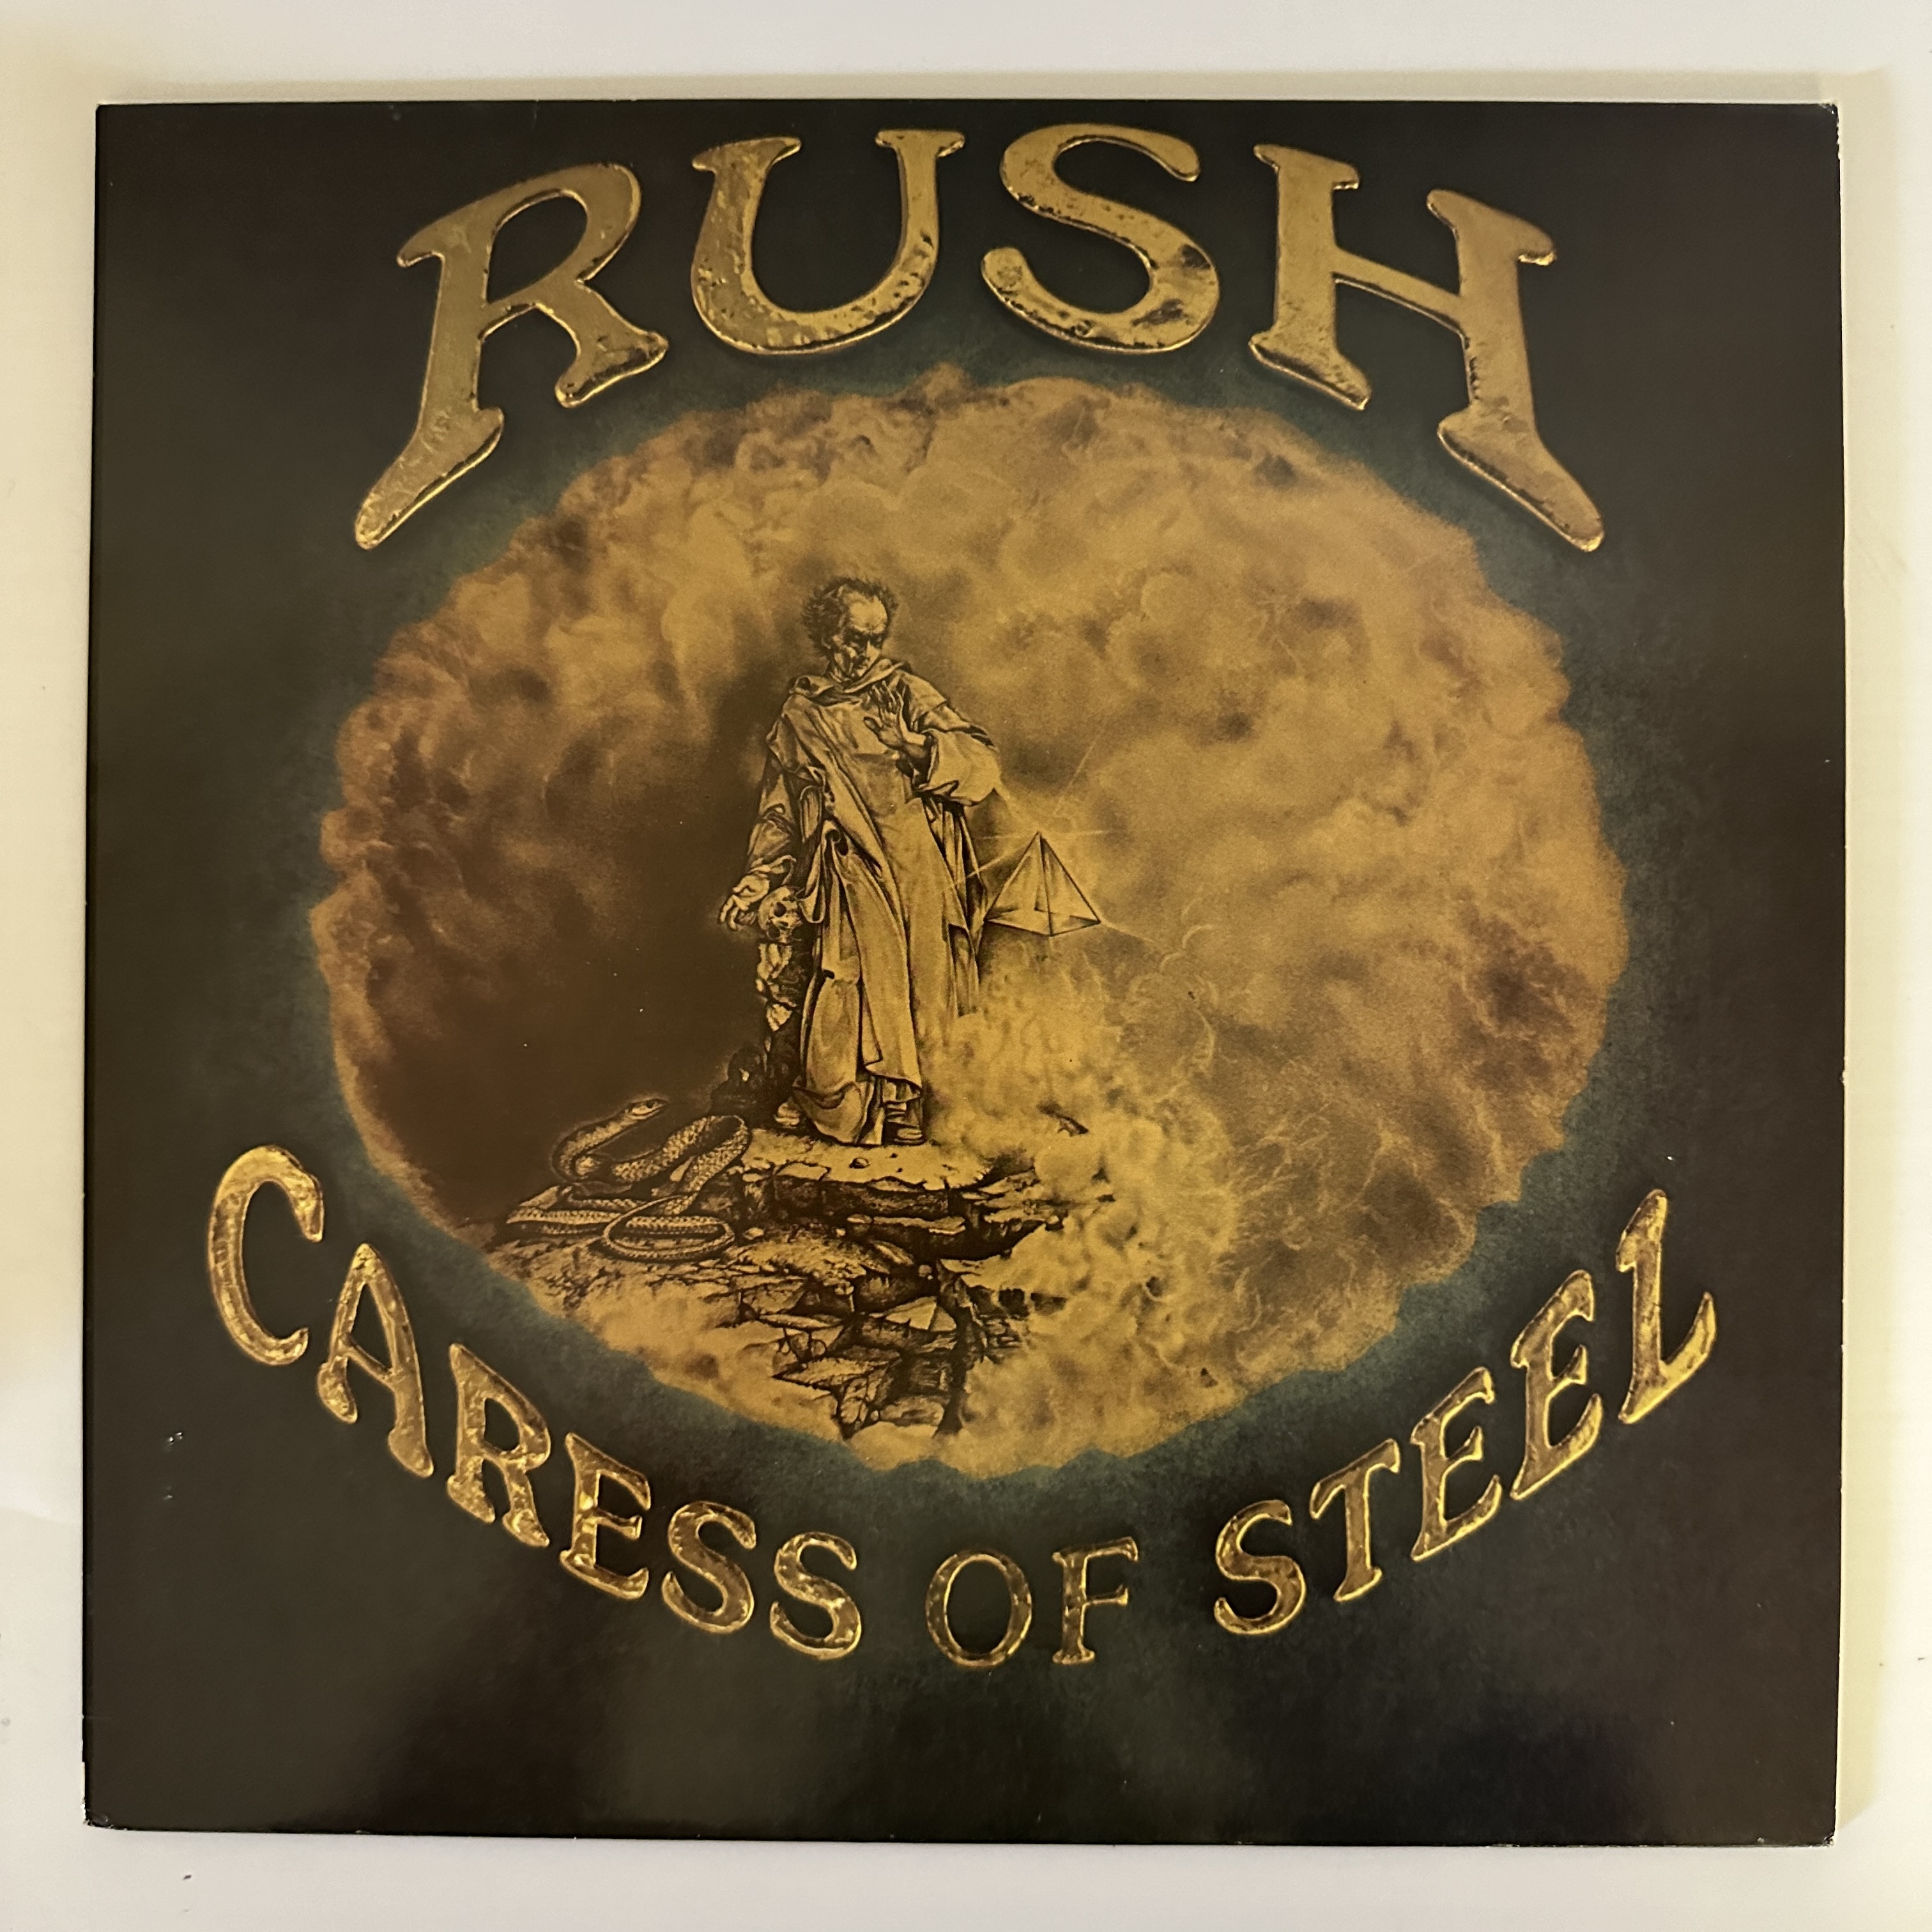 A Rush - Caress of Steel vinyl LP - Image 2 of 4